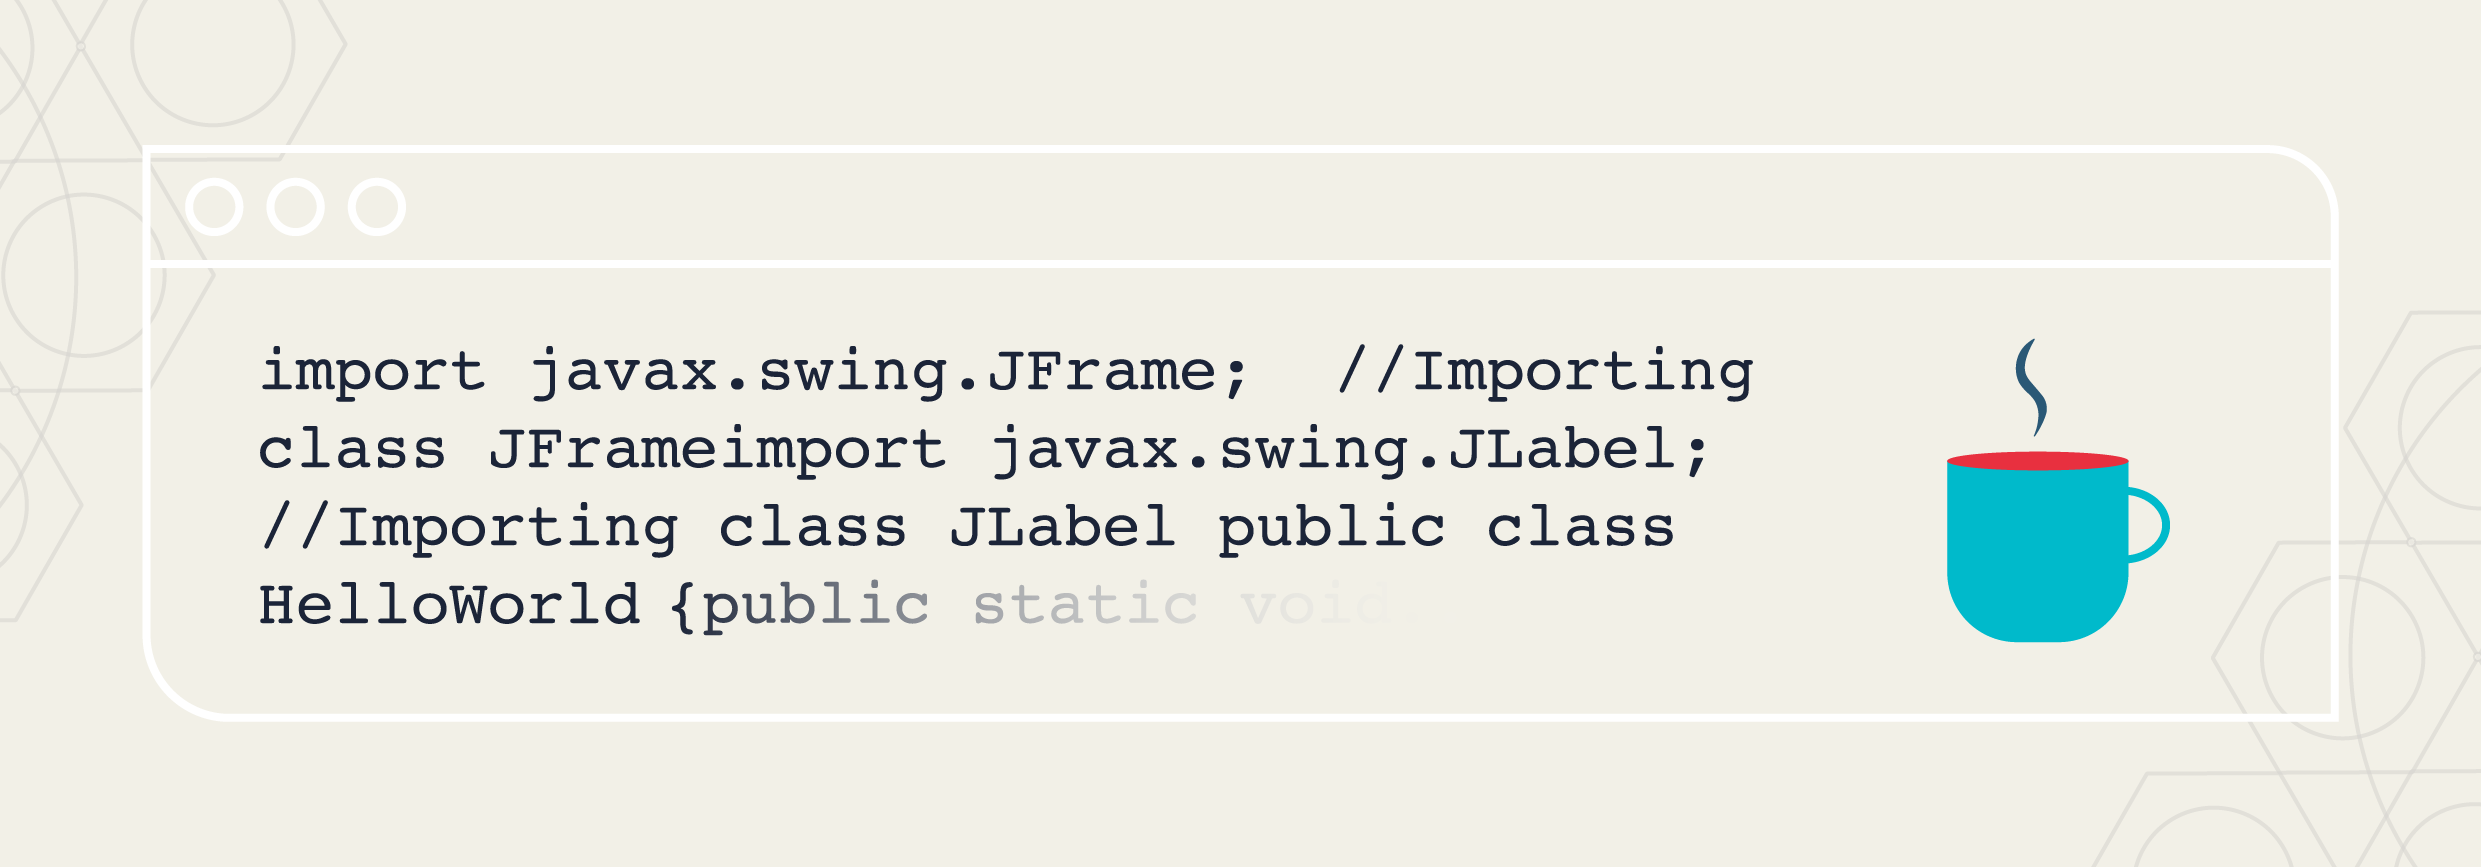 java programming language "hello world" code and logo